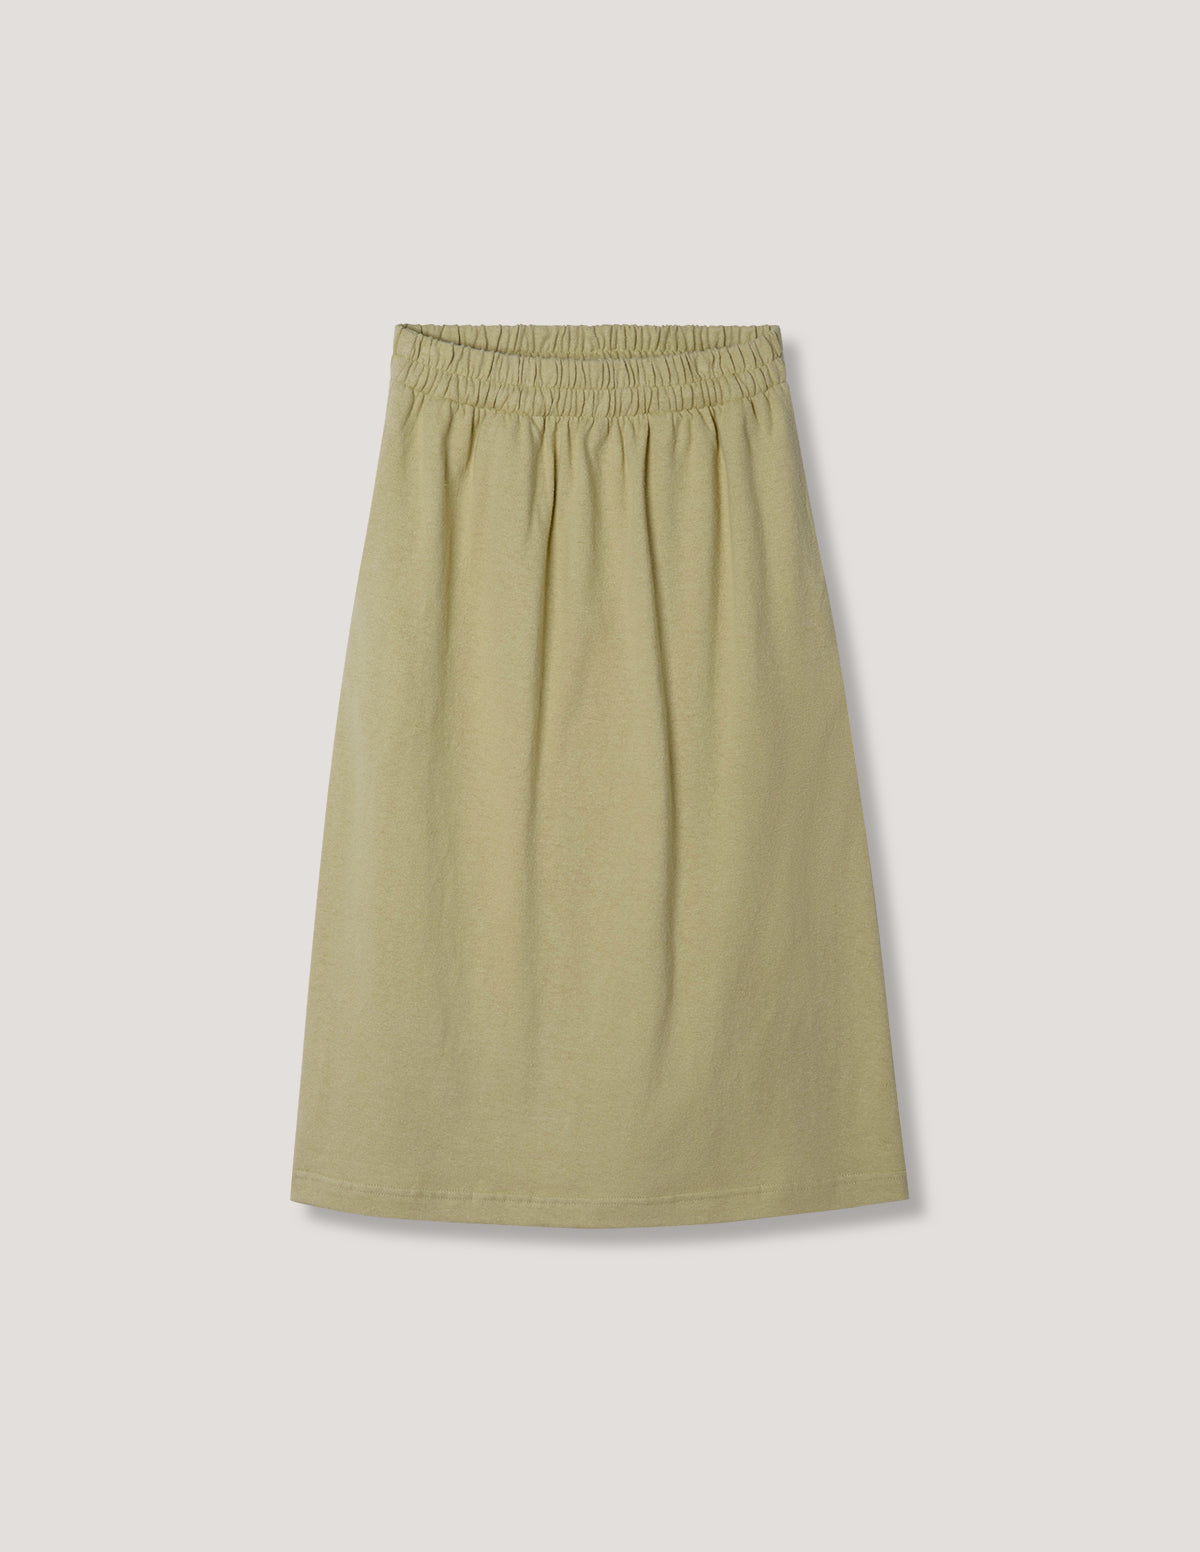 youth - citrus organic cotton hemp skirt